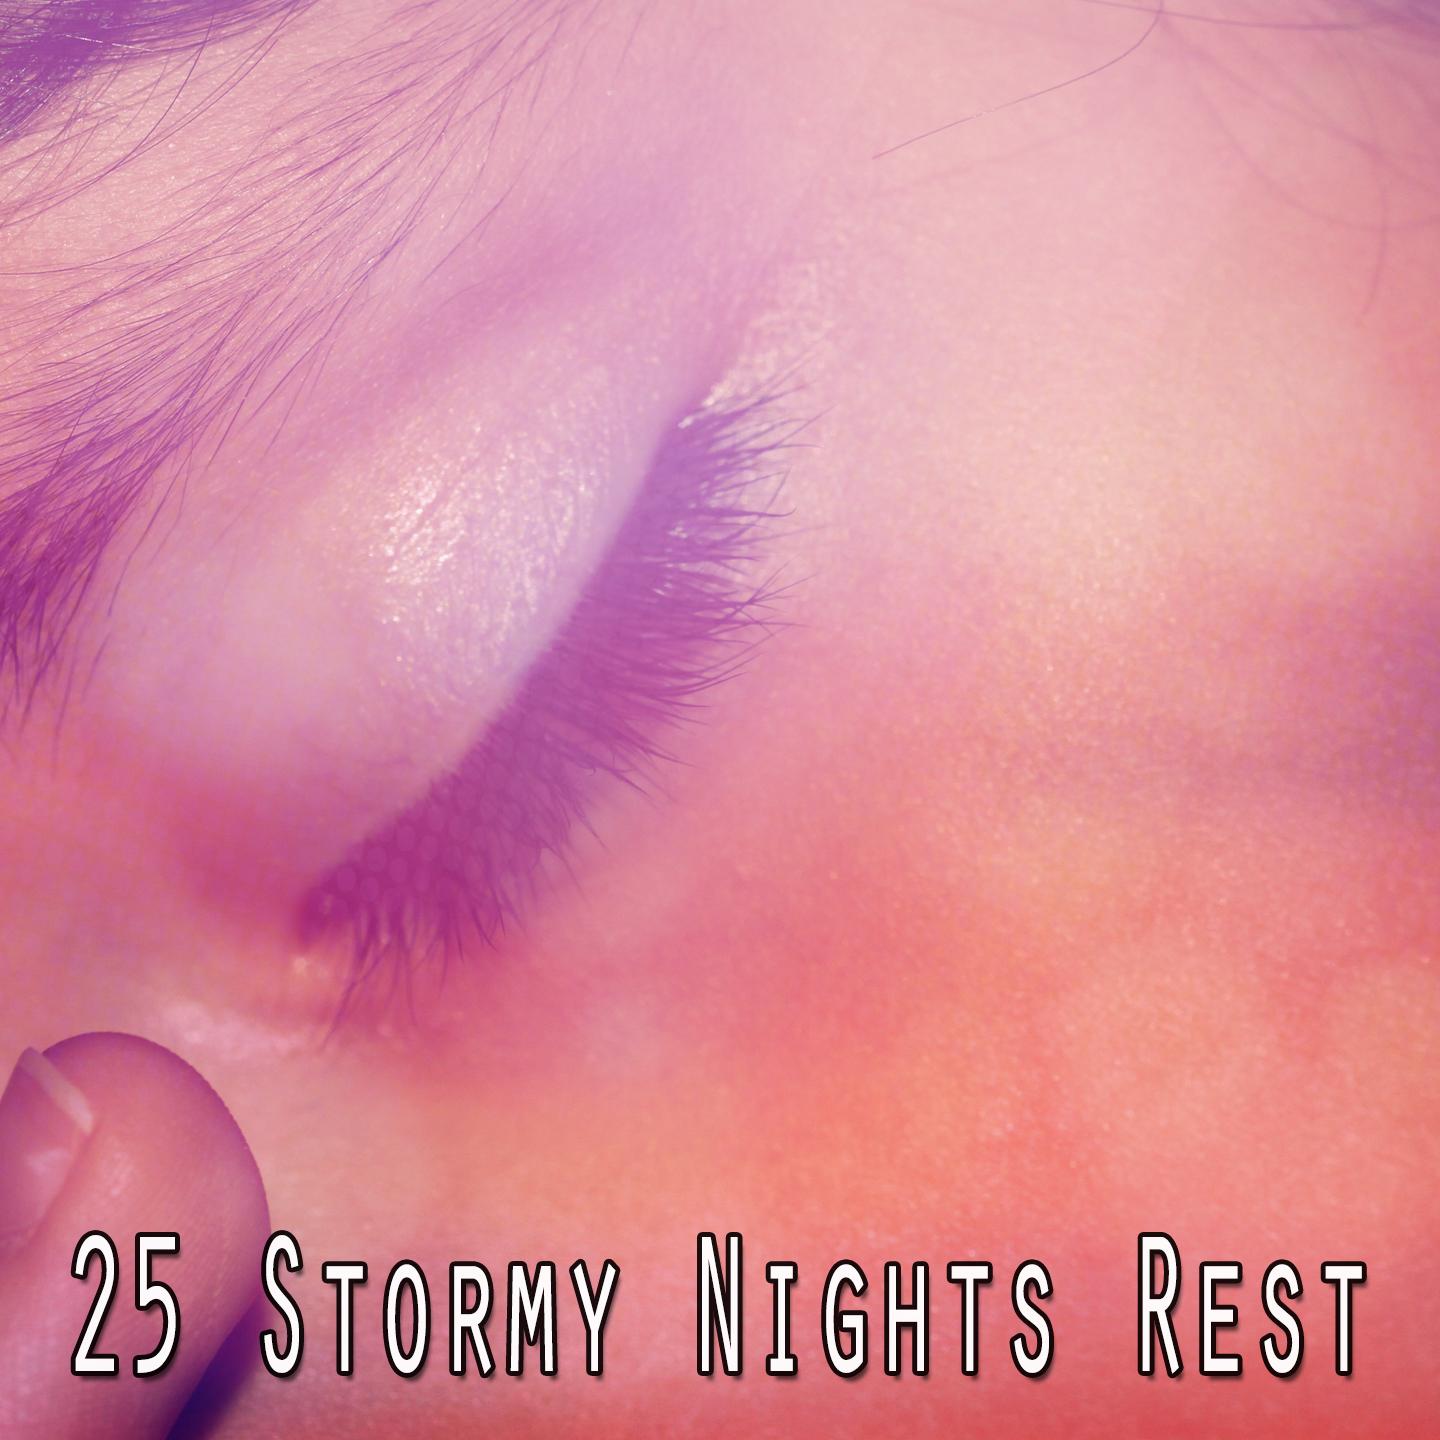 25 Stormy Nights Rest